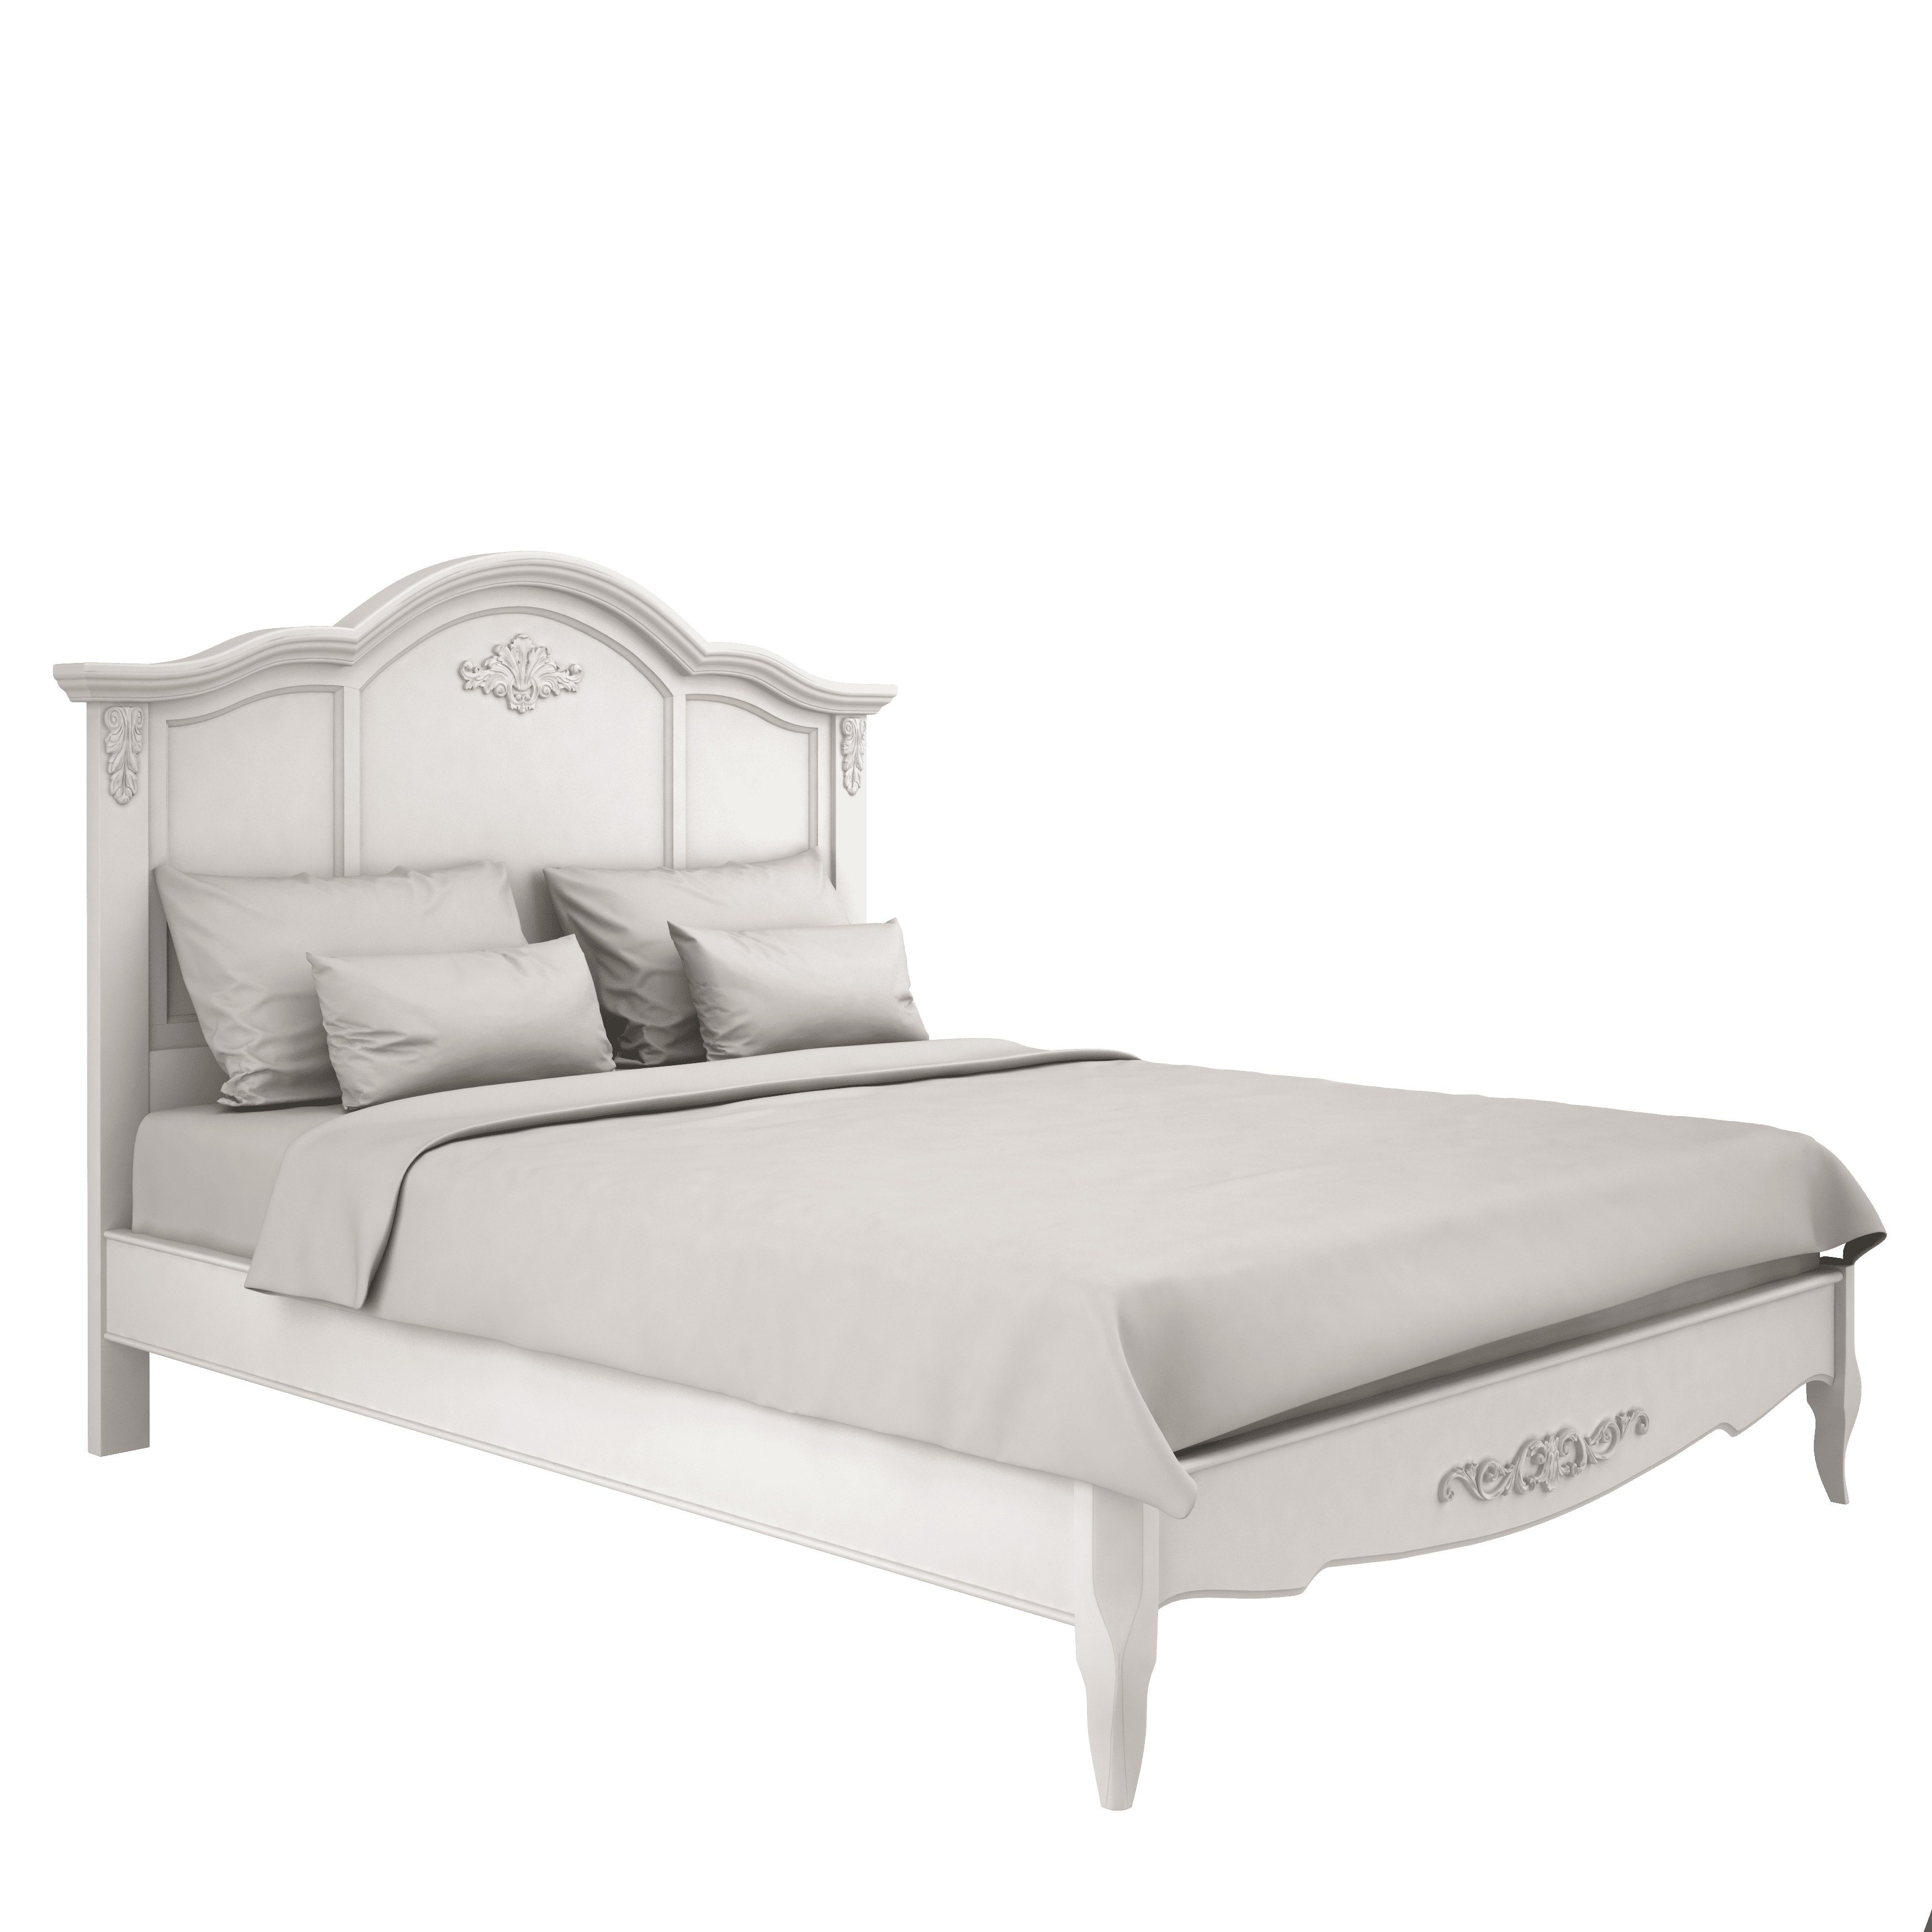 Кровать Aletan Provence, двуспальная, 160x200 см, цвет: слоновая кость, размер 178х211х129 см (B206)B206